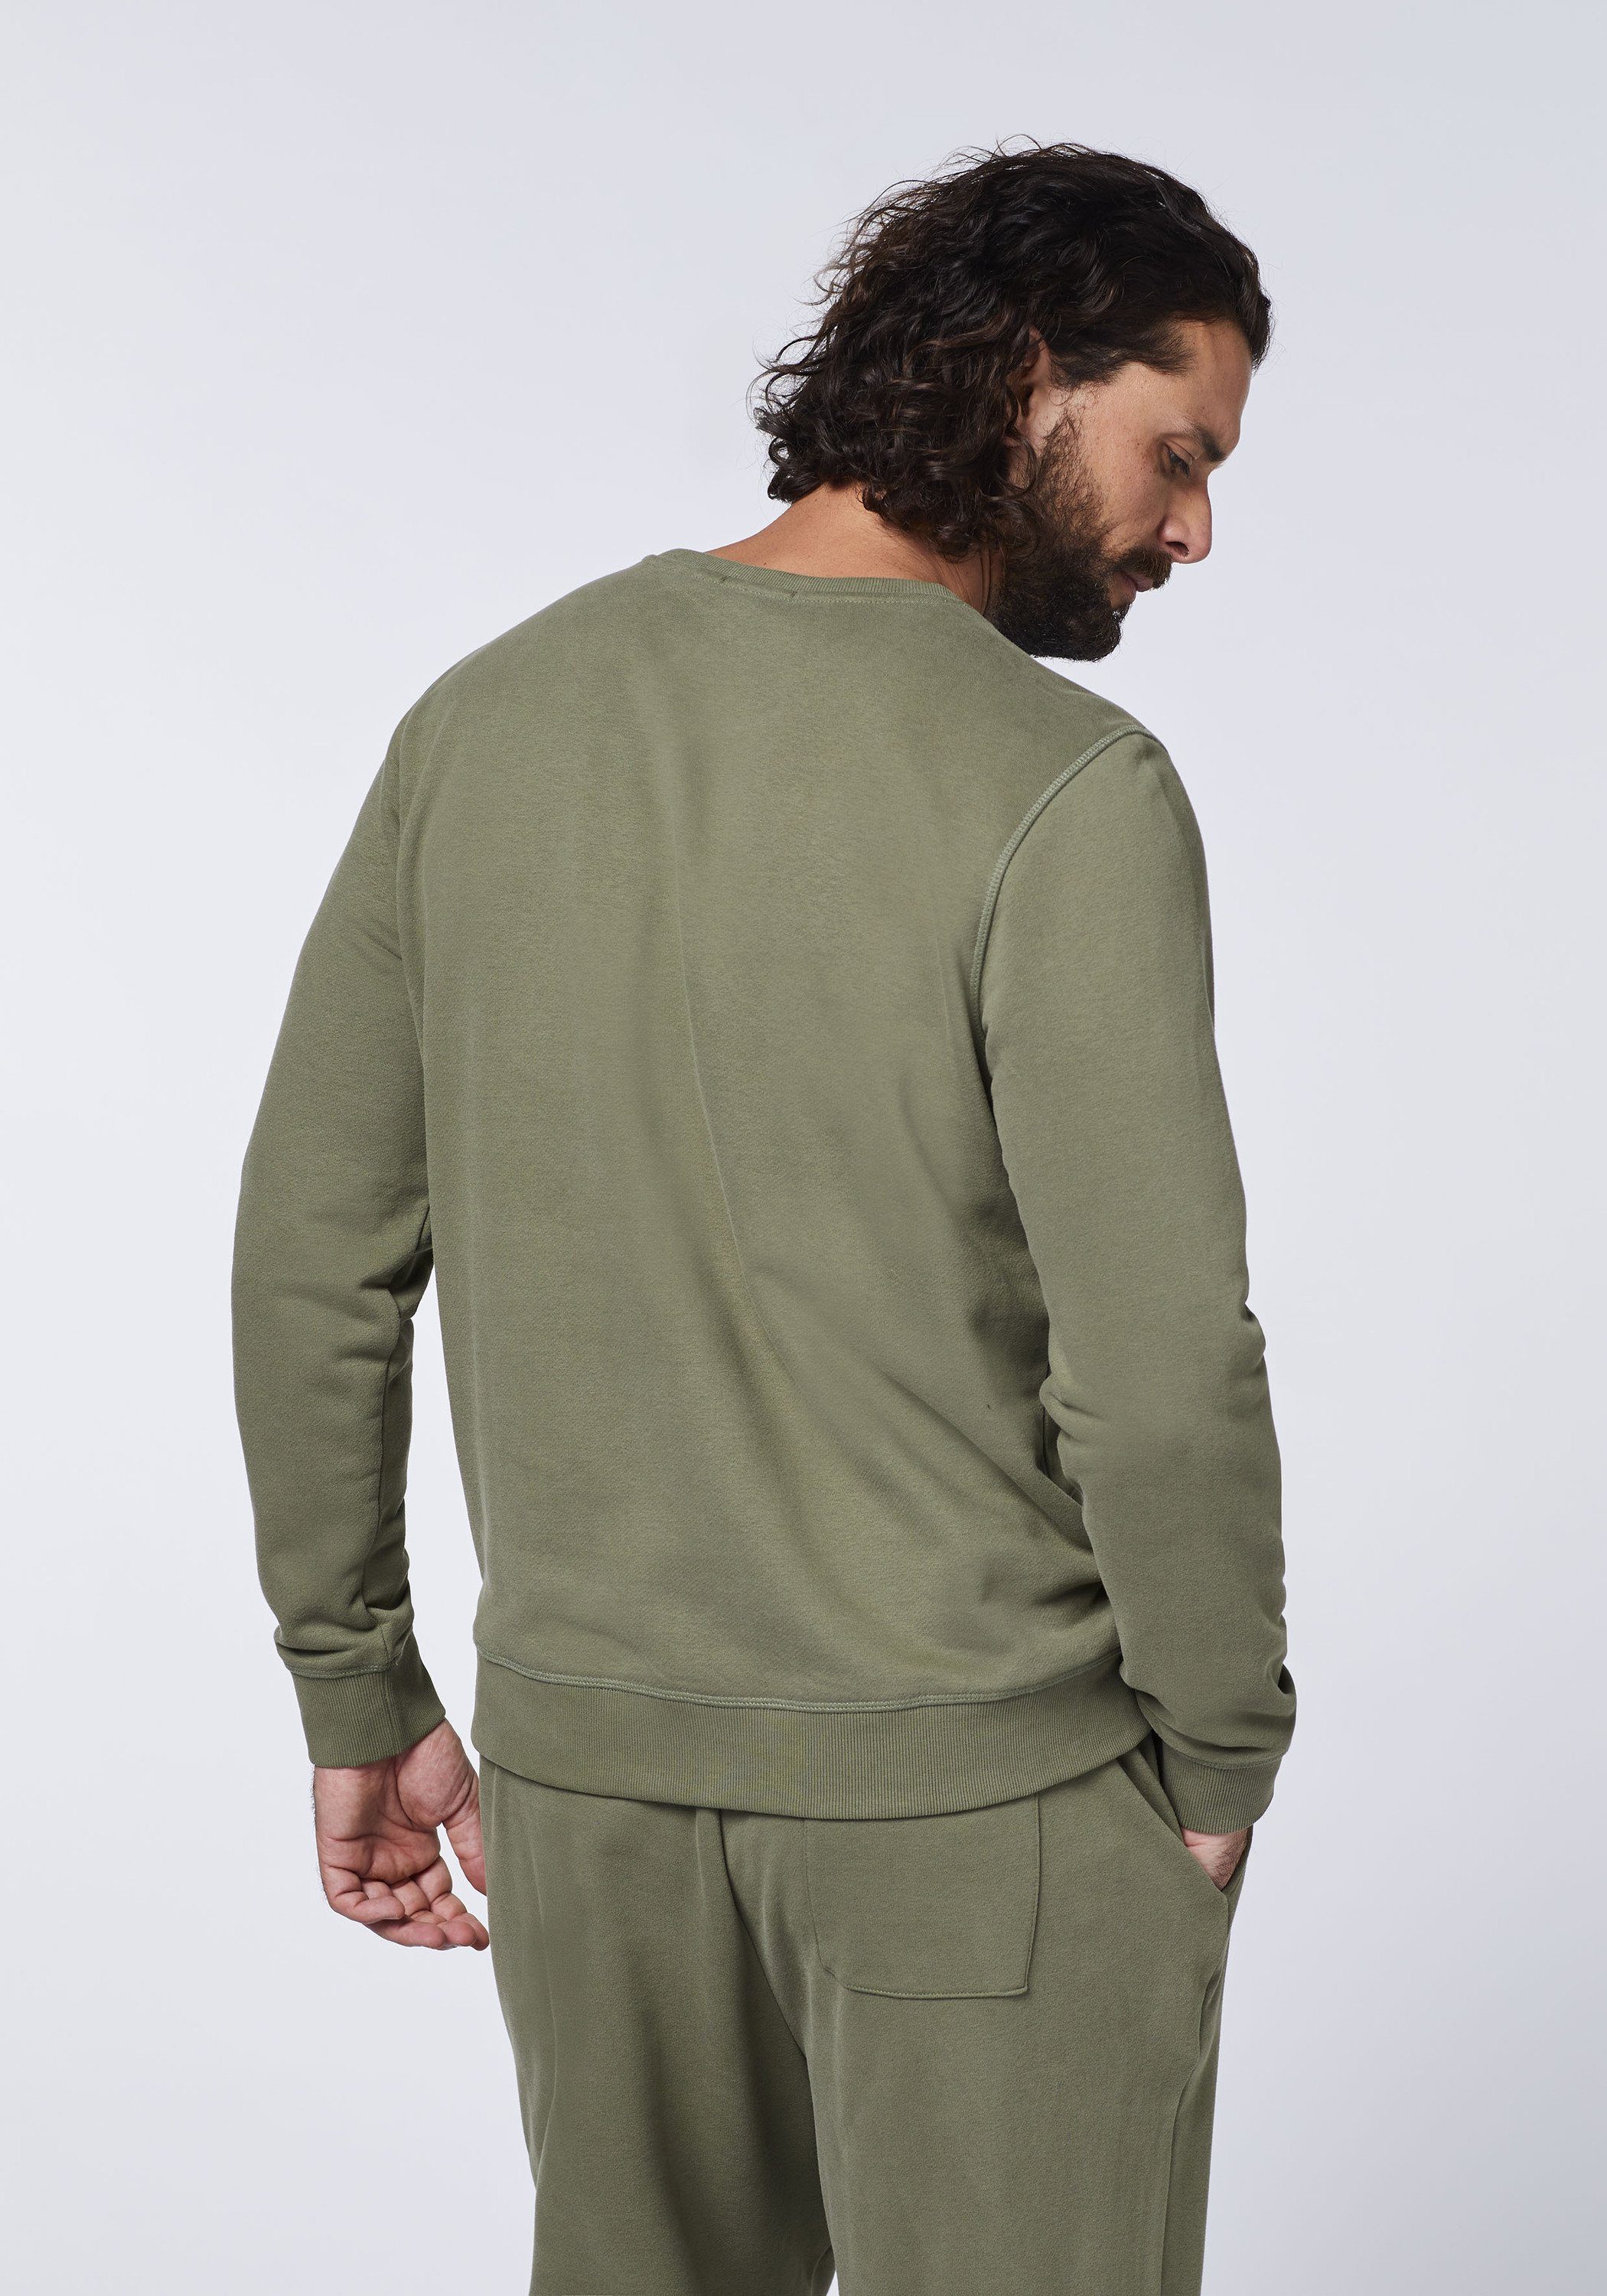 Olive 18-0515 Chiemsee Label-Look Dusty Sweater 1 im Sweatshirt